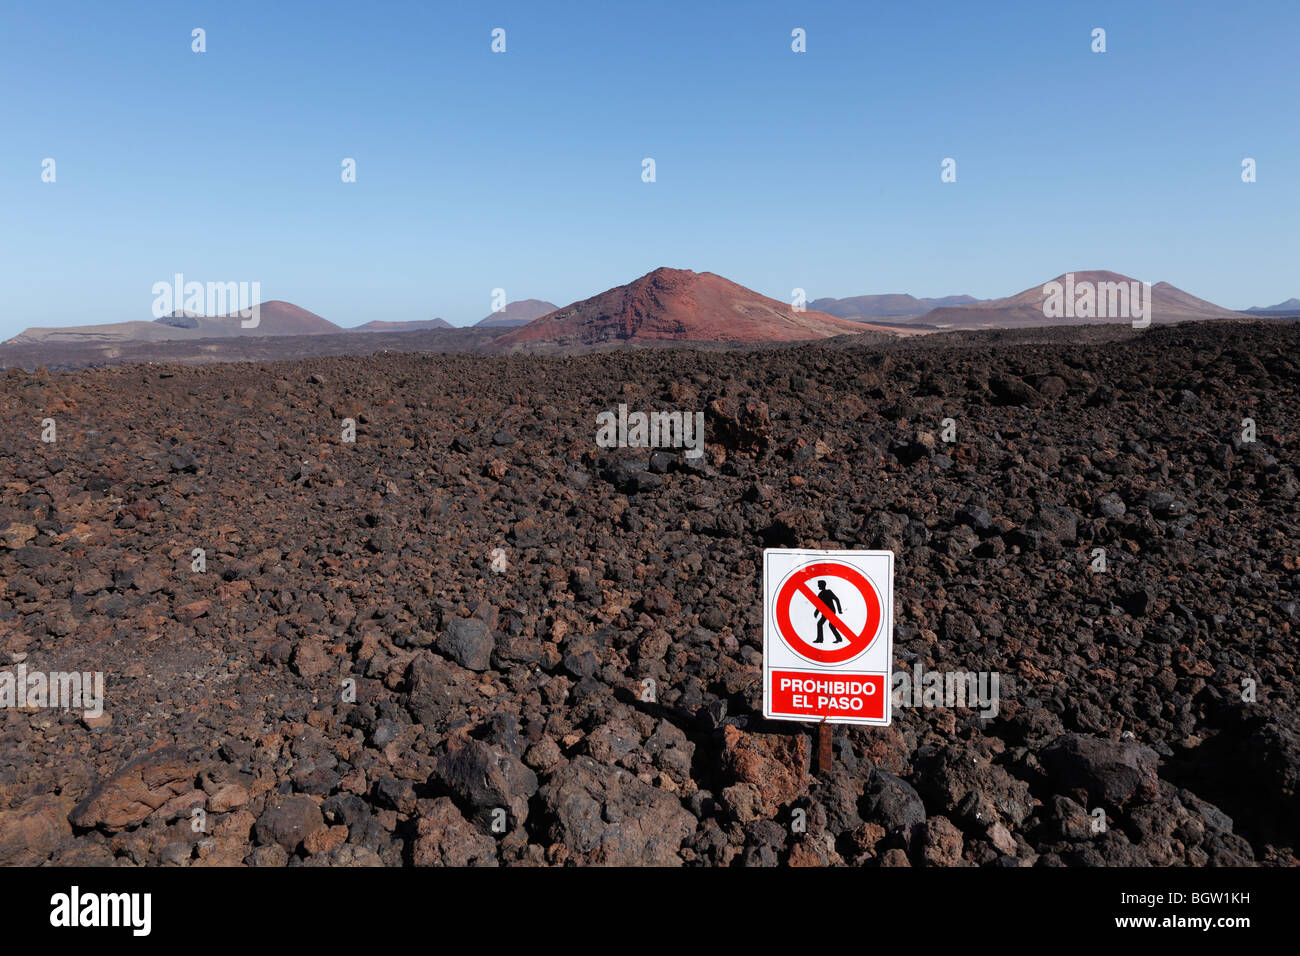 Nessuna voce segno, Prohibito El Paso, Parque Natural de Los Volcanes, Los vulcani Parco Nazionale Vulcani, Lanzarote, Canary Islan Foto Stock